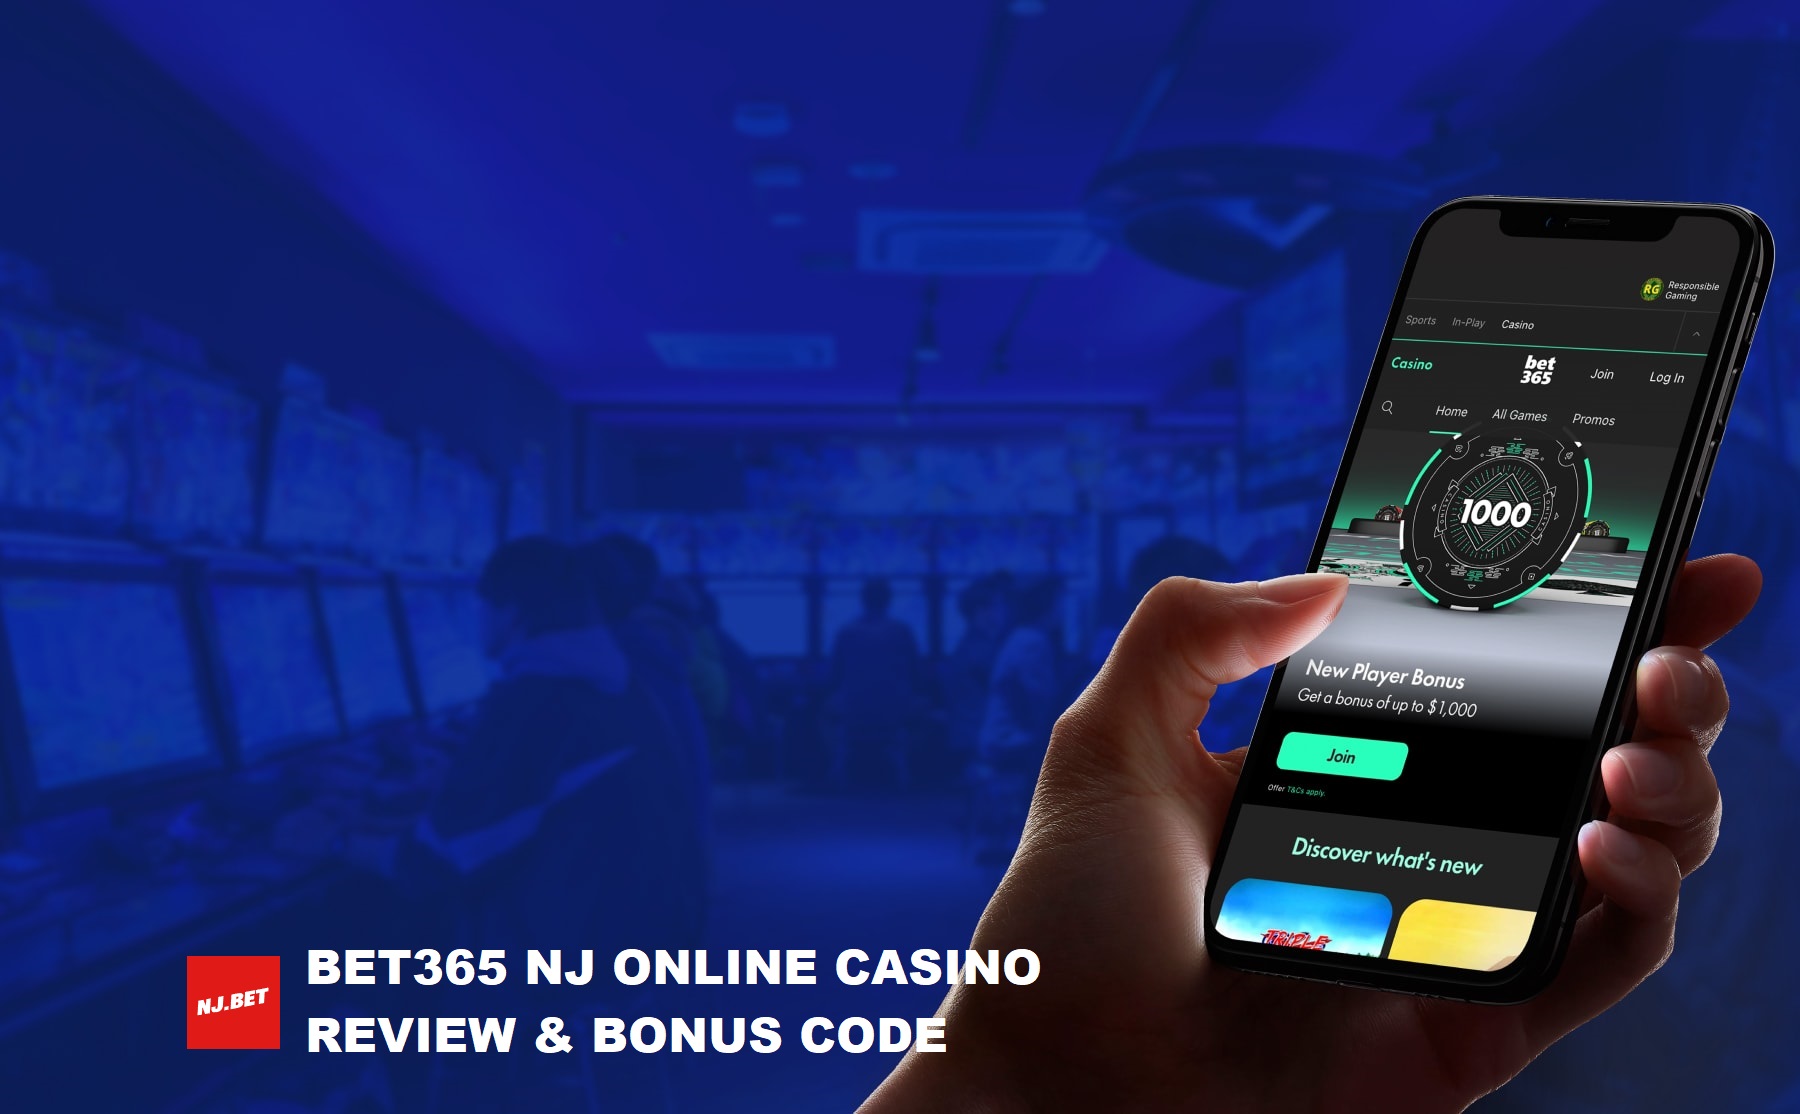 bet365 NJ online casino promo